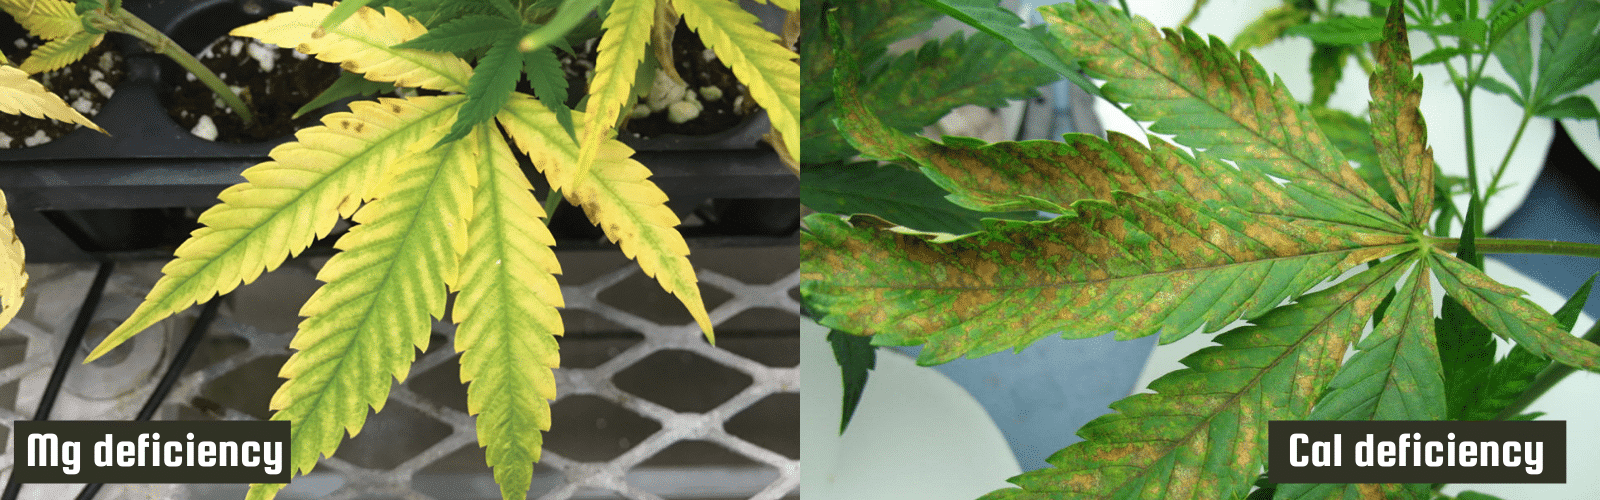 cal mg deficiency in weed plant